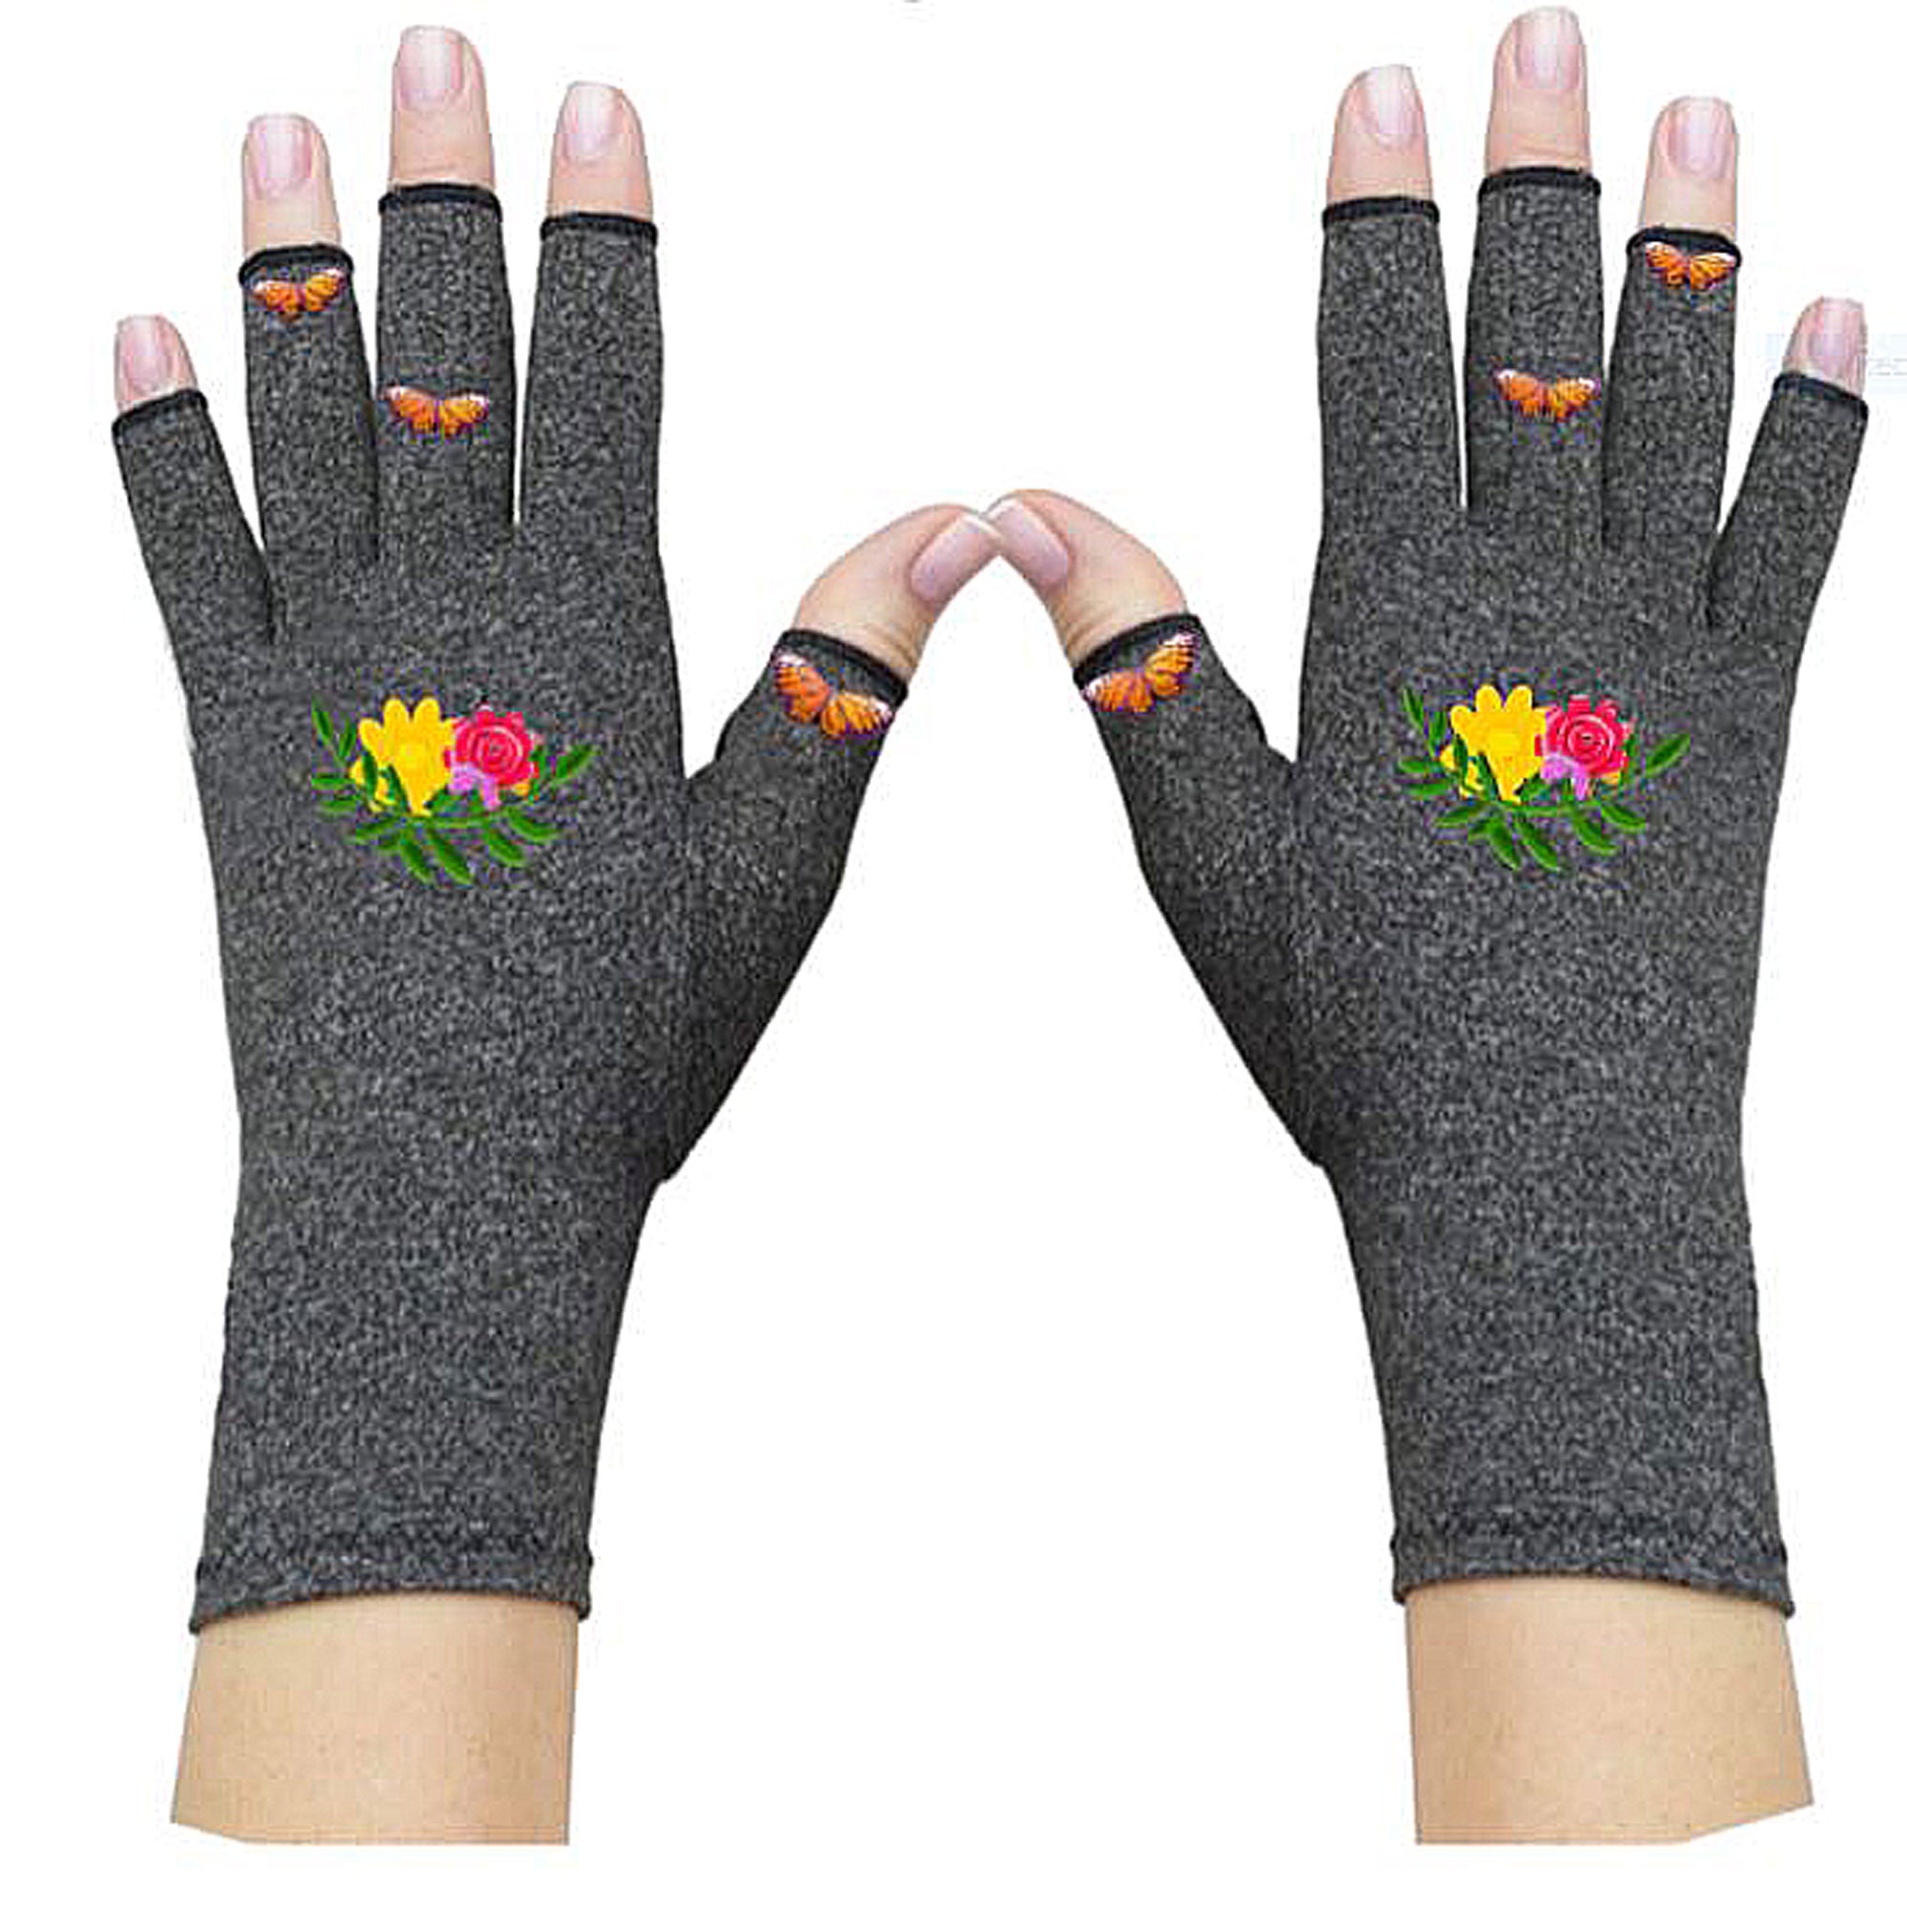 wrist warmers fingerless gloves